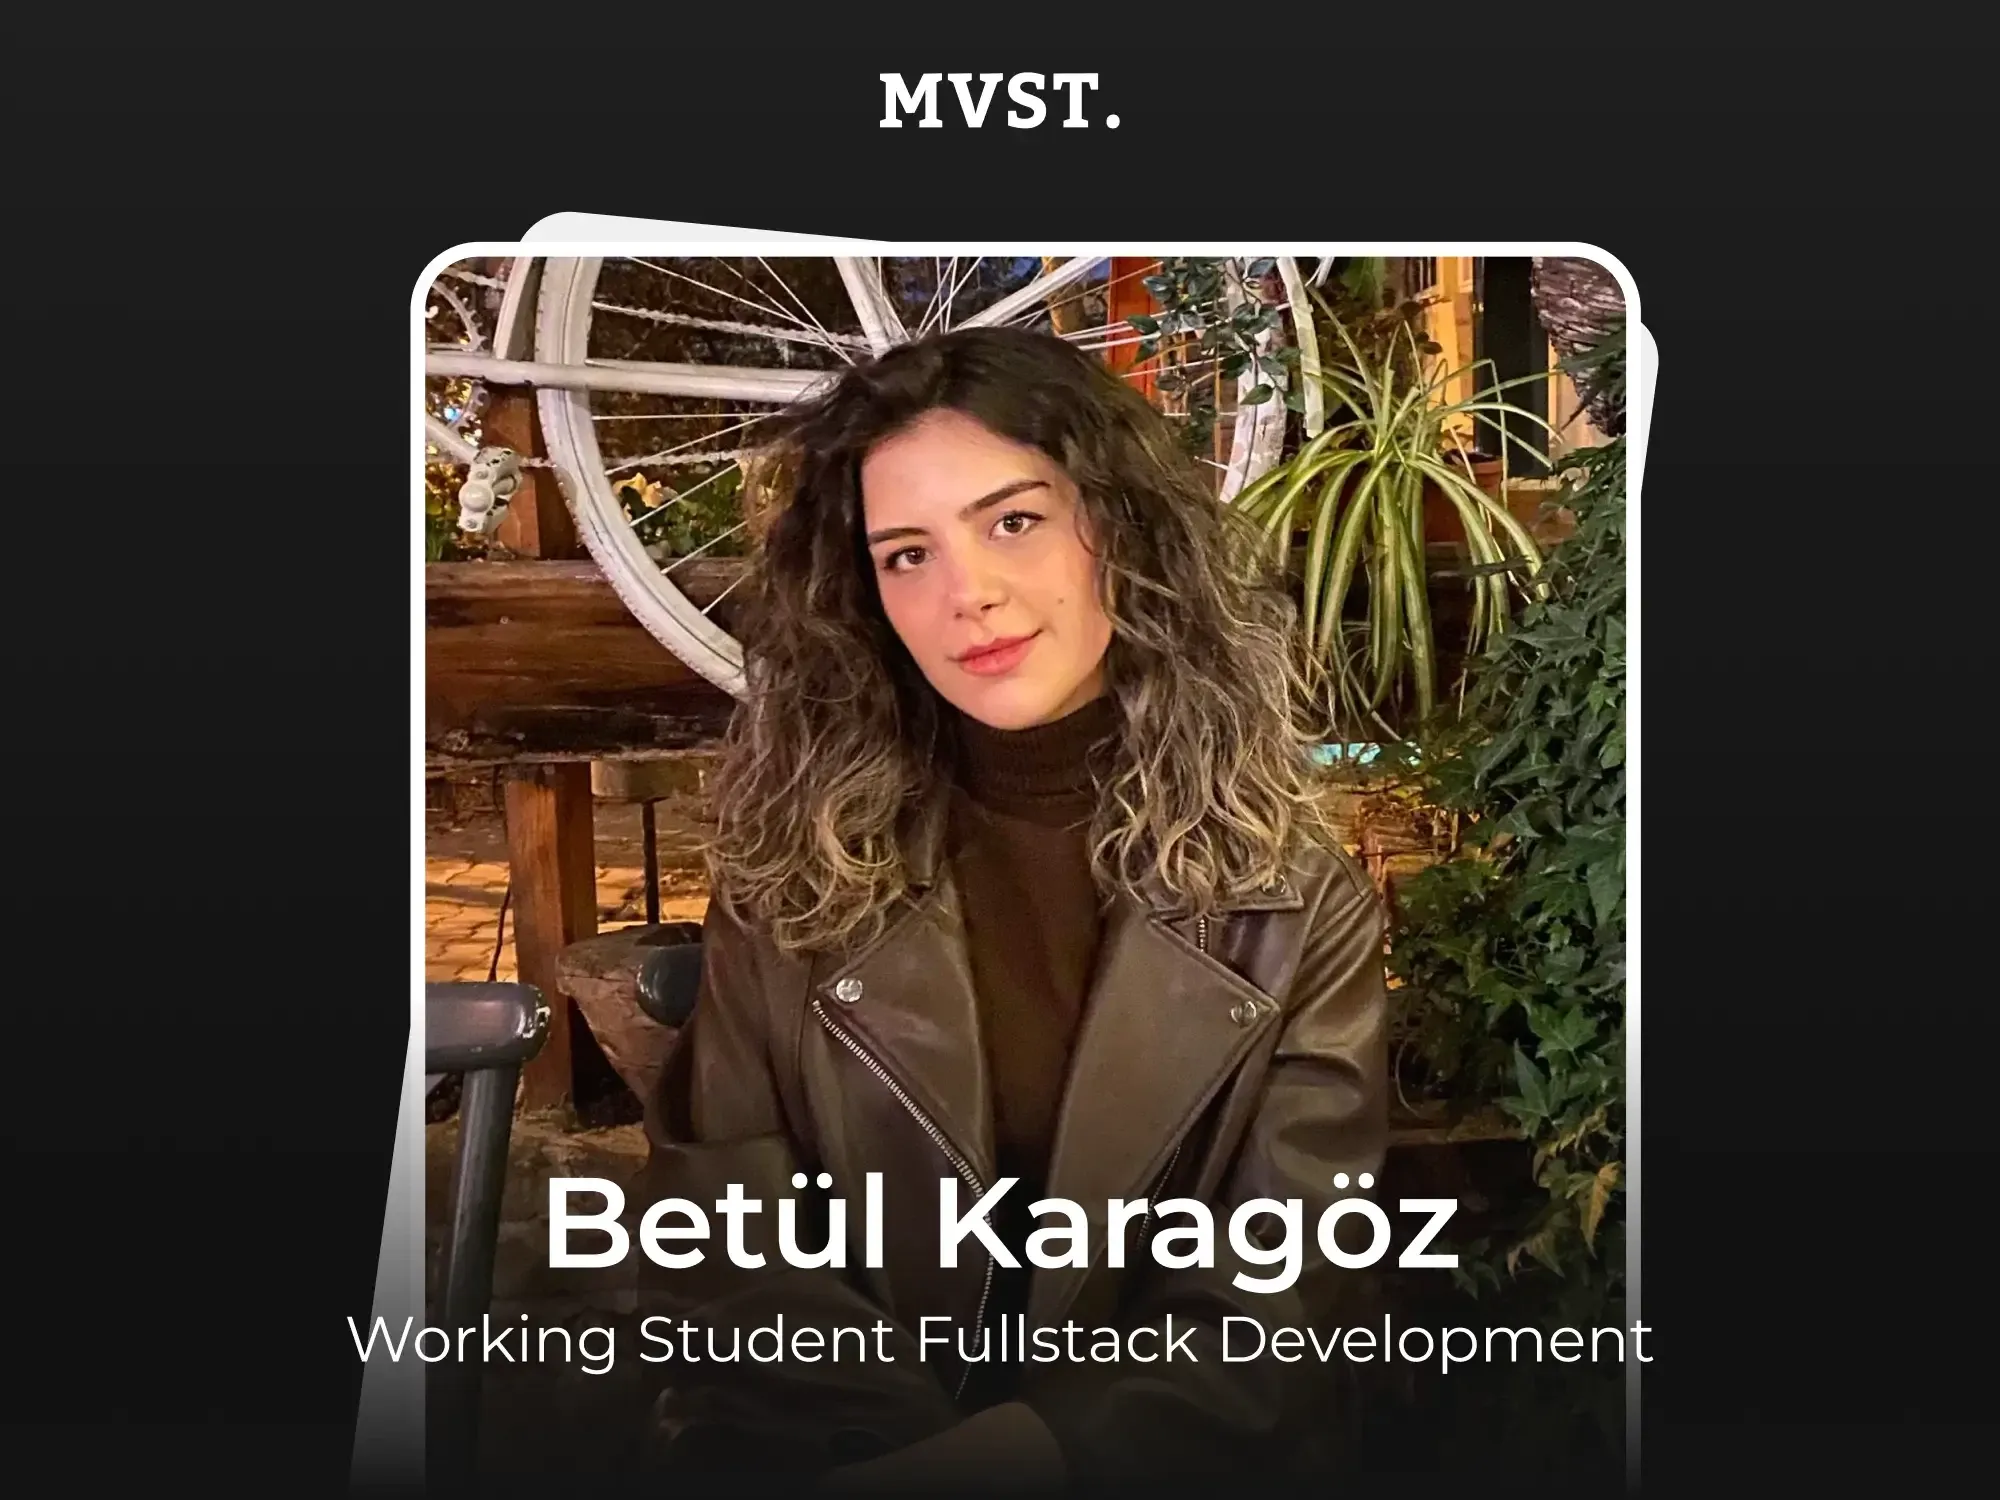 Welcome to MVST, Betül!